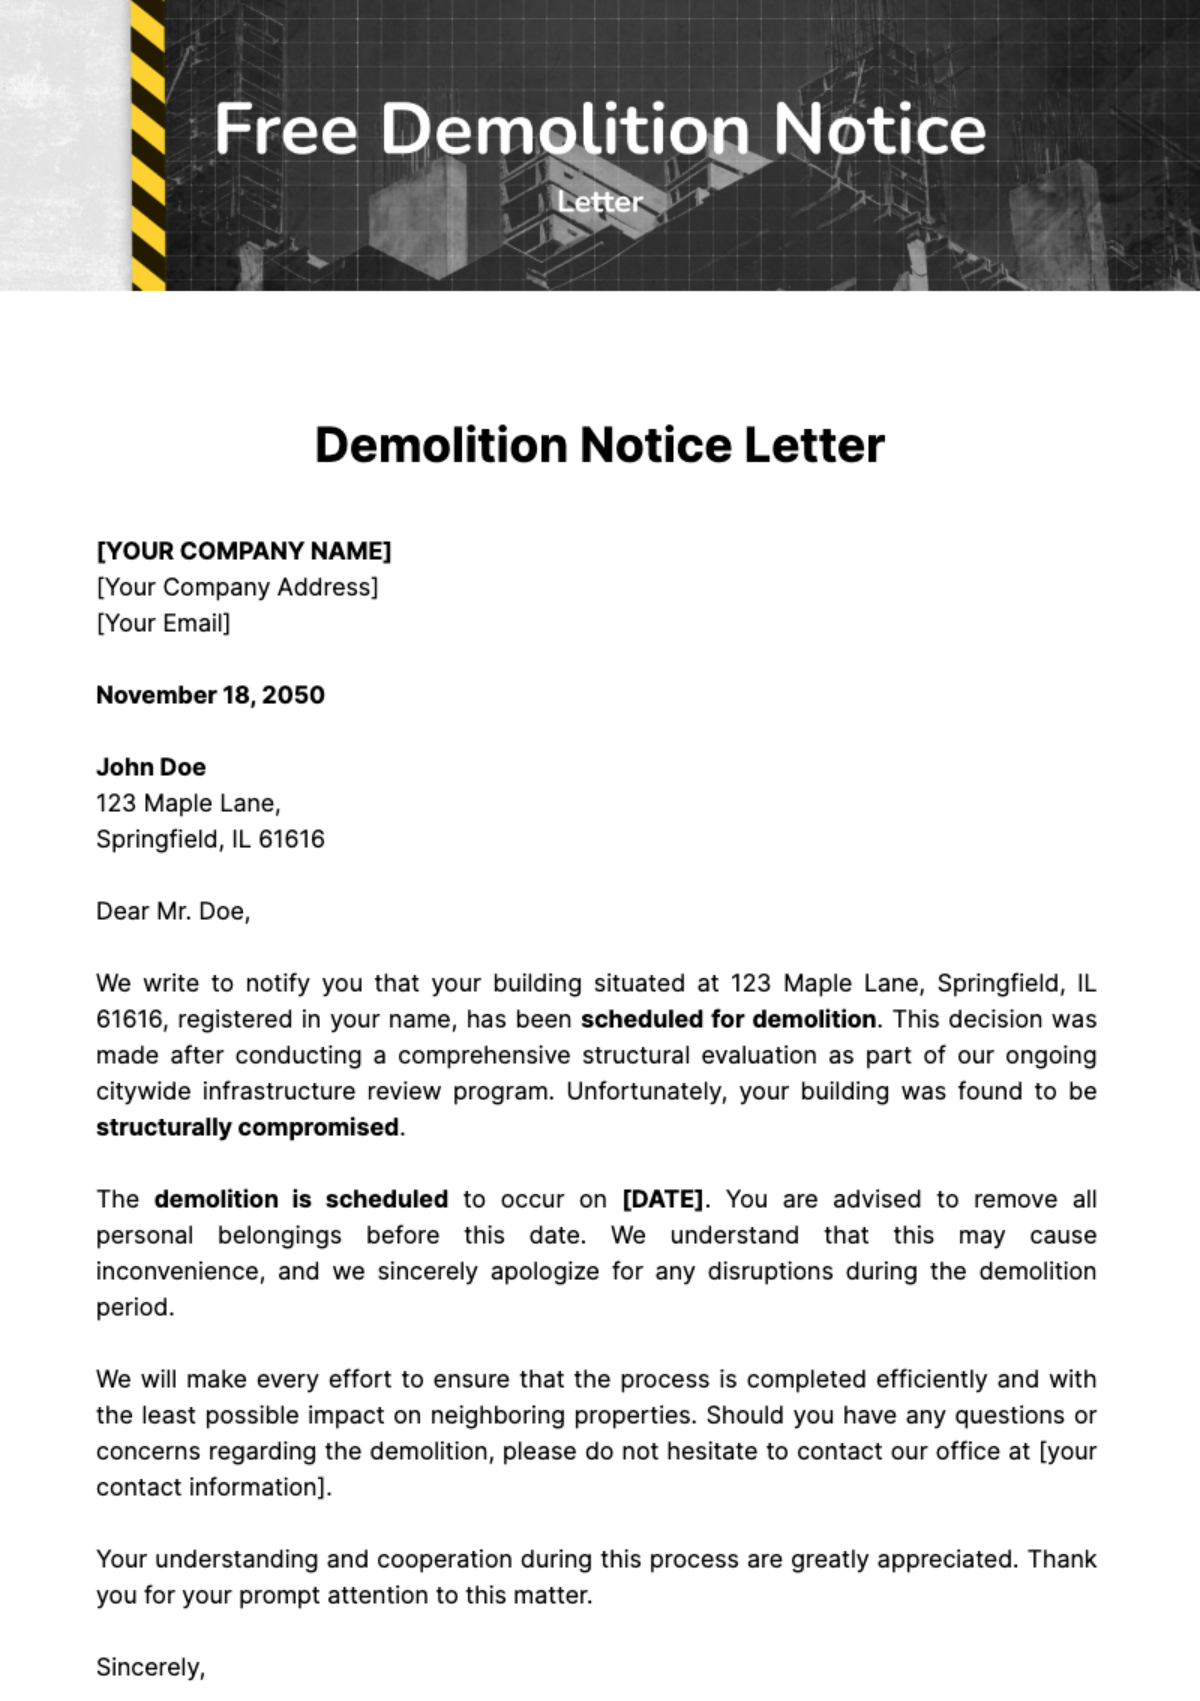 Free Demolition Notice Letter Template